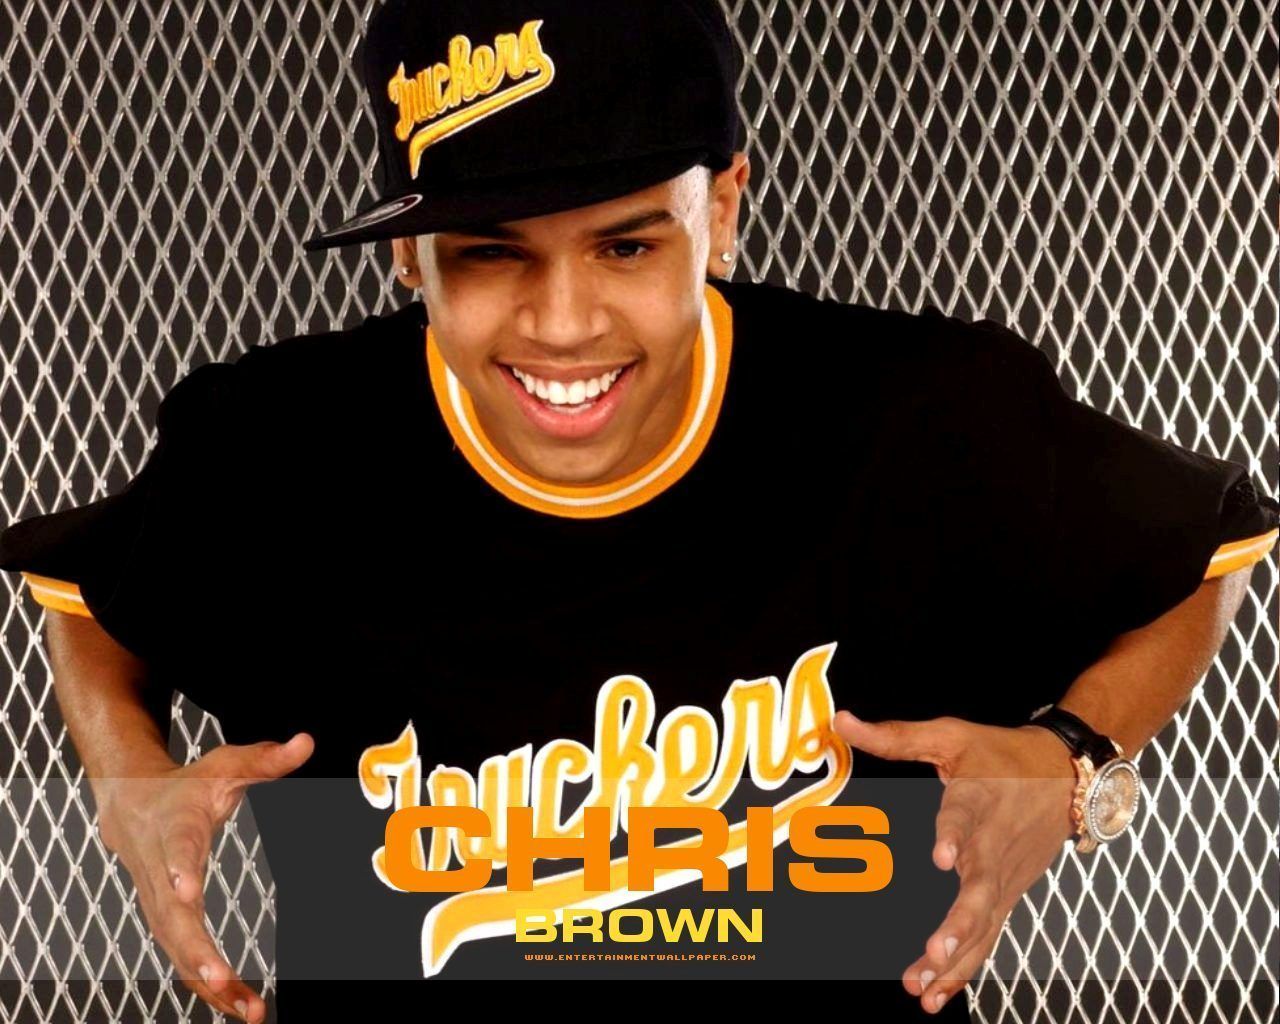 Chris Brown - Chris Brown Wallpaper (892815) - Fanpop